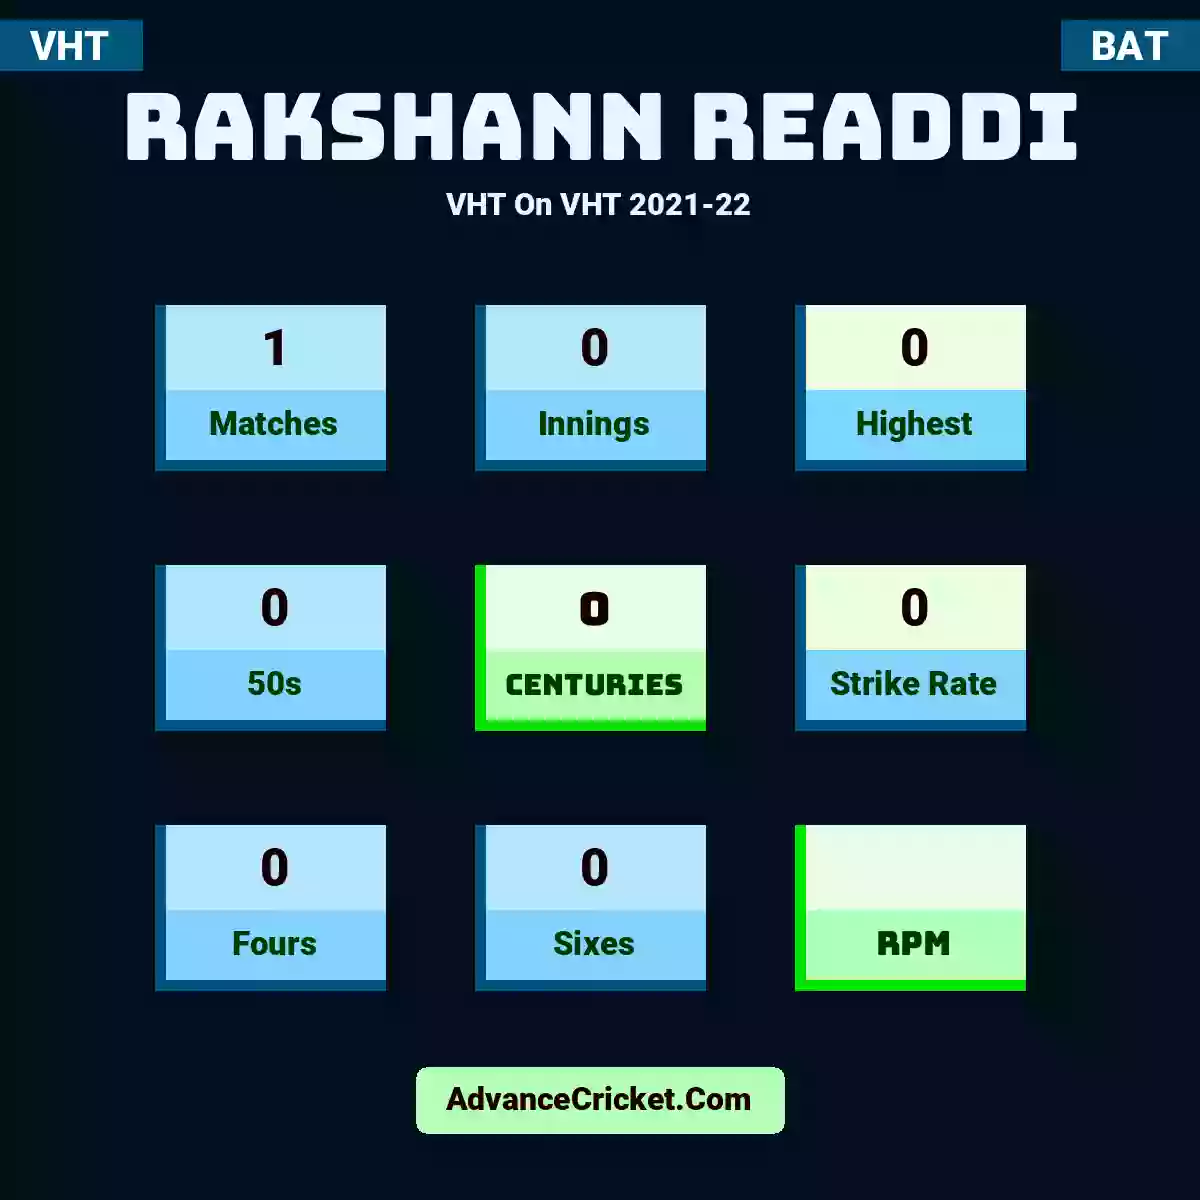 Rakshann Readdi VHT  On VHT 2021-22, Rakshann Readdi played 1 matches, scored 0 runs as highest, 0 half-centuries, and 0 centuries, with a strike rate of 0. R.Readdi hit 0 fours and 0 sixes.